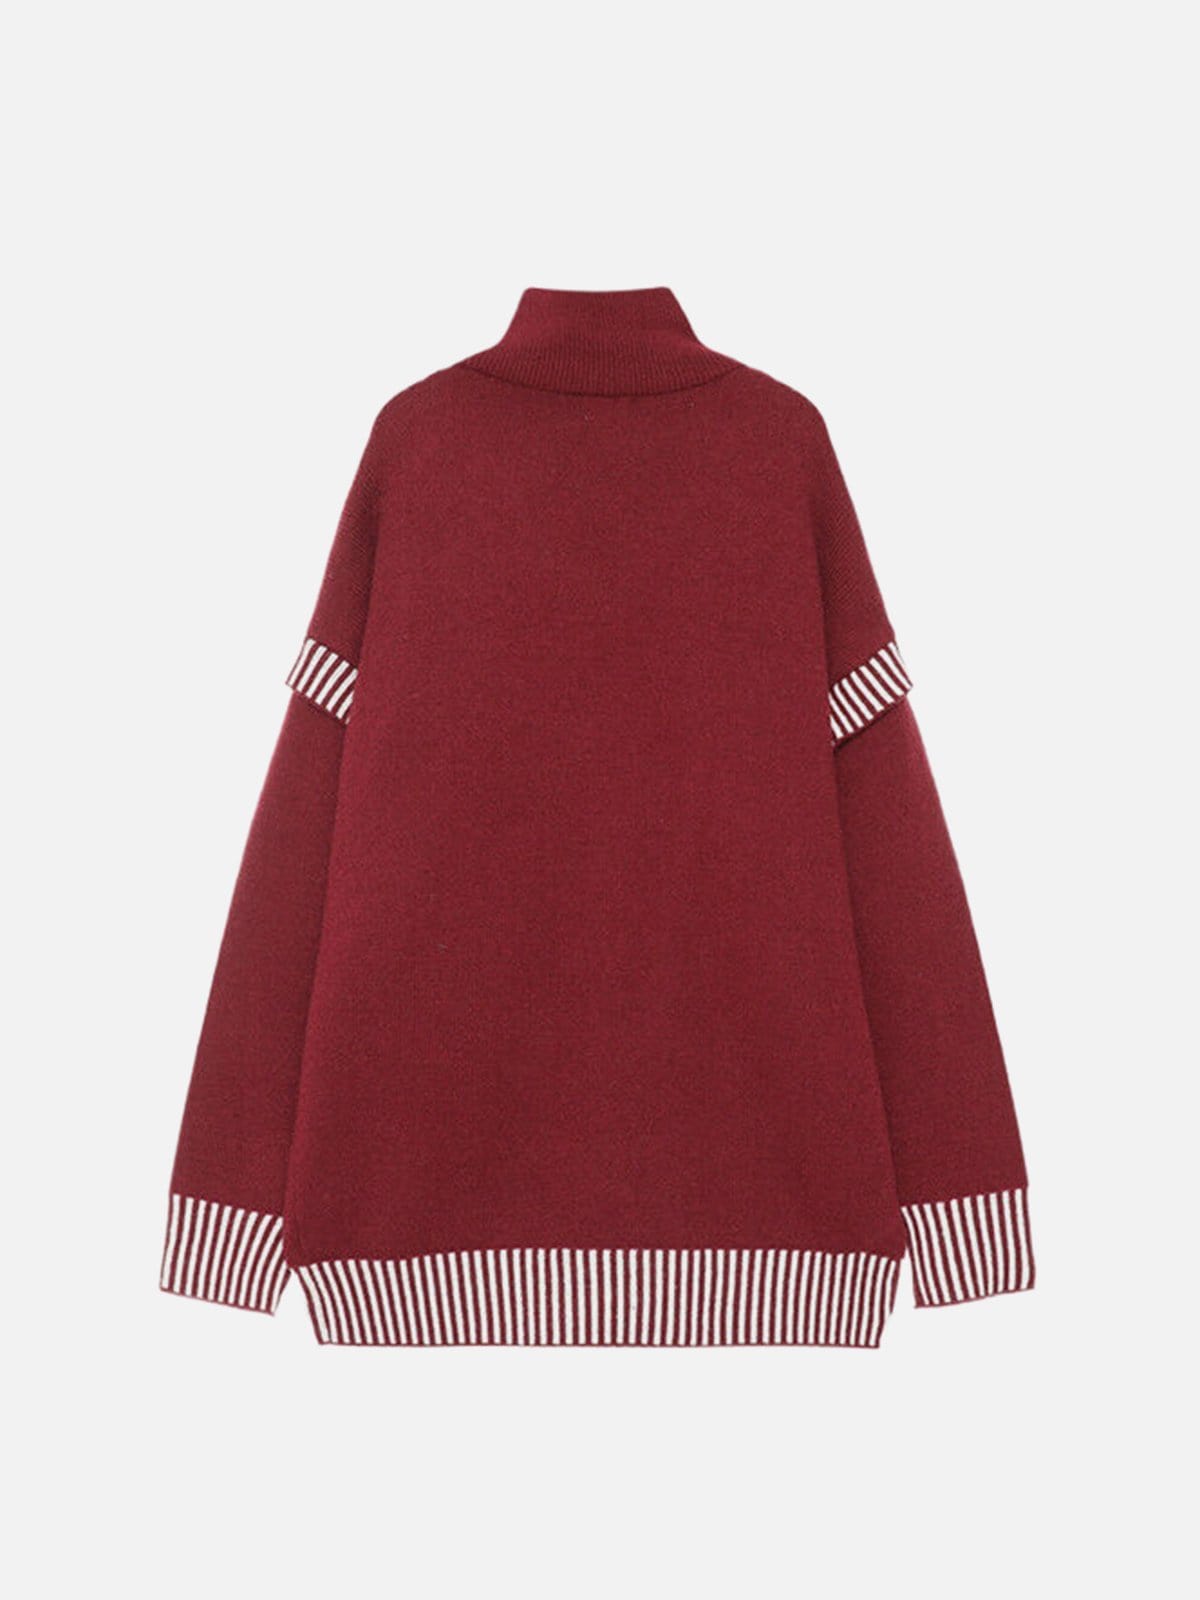 NEV Striped Material Splicing Zip Cardigan Sweater